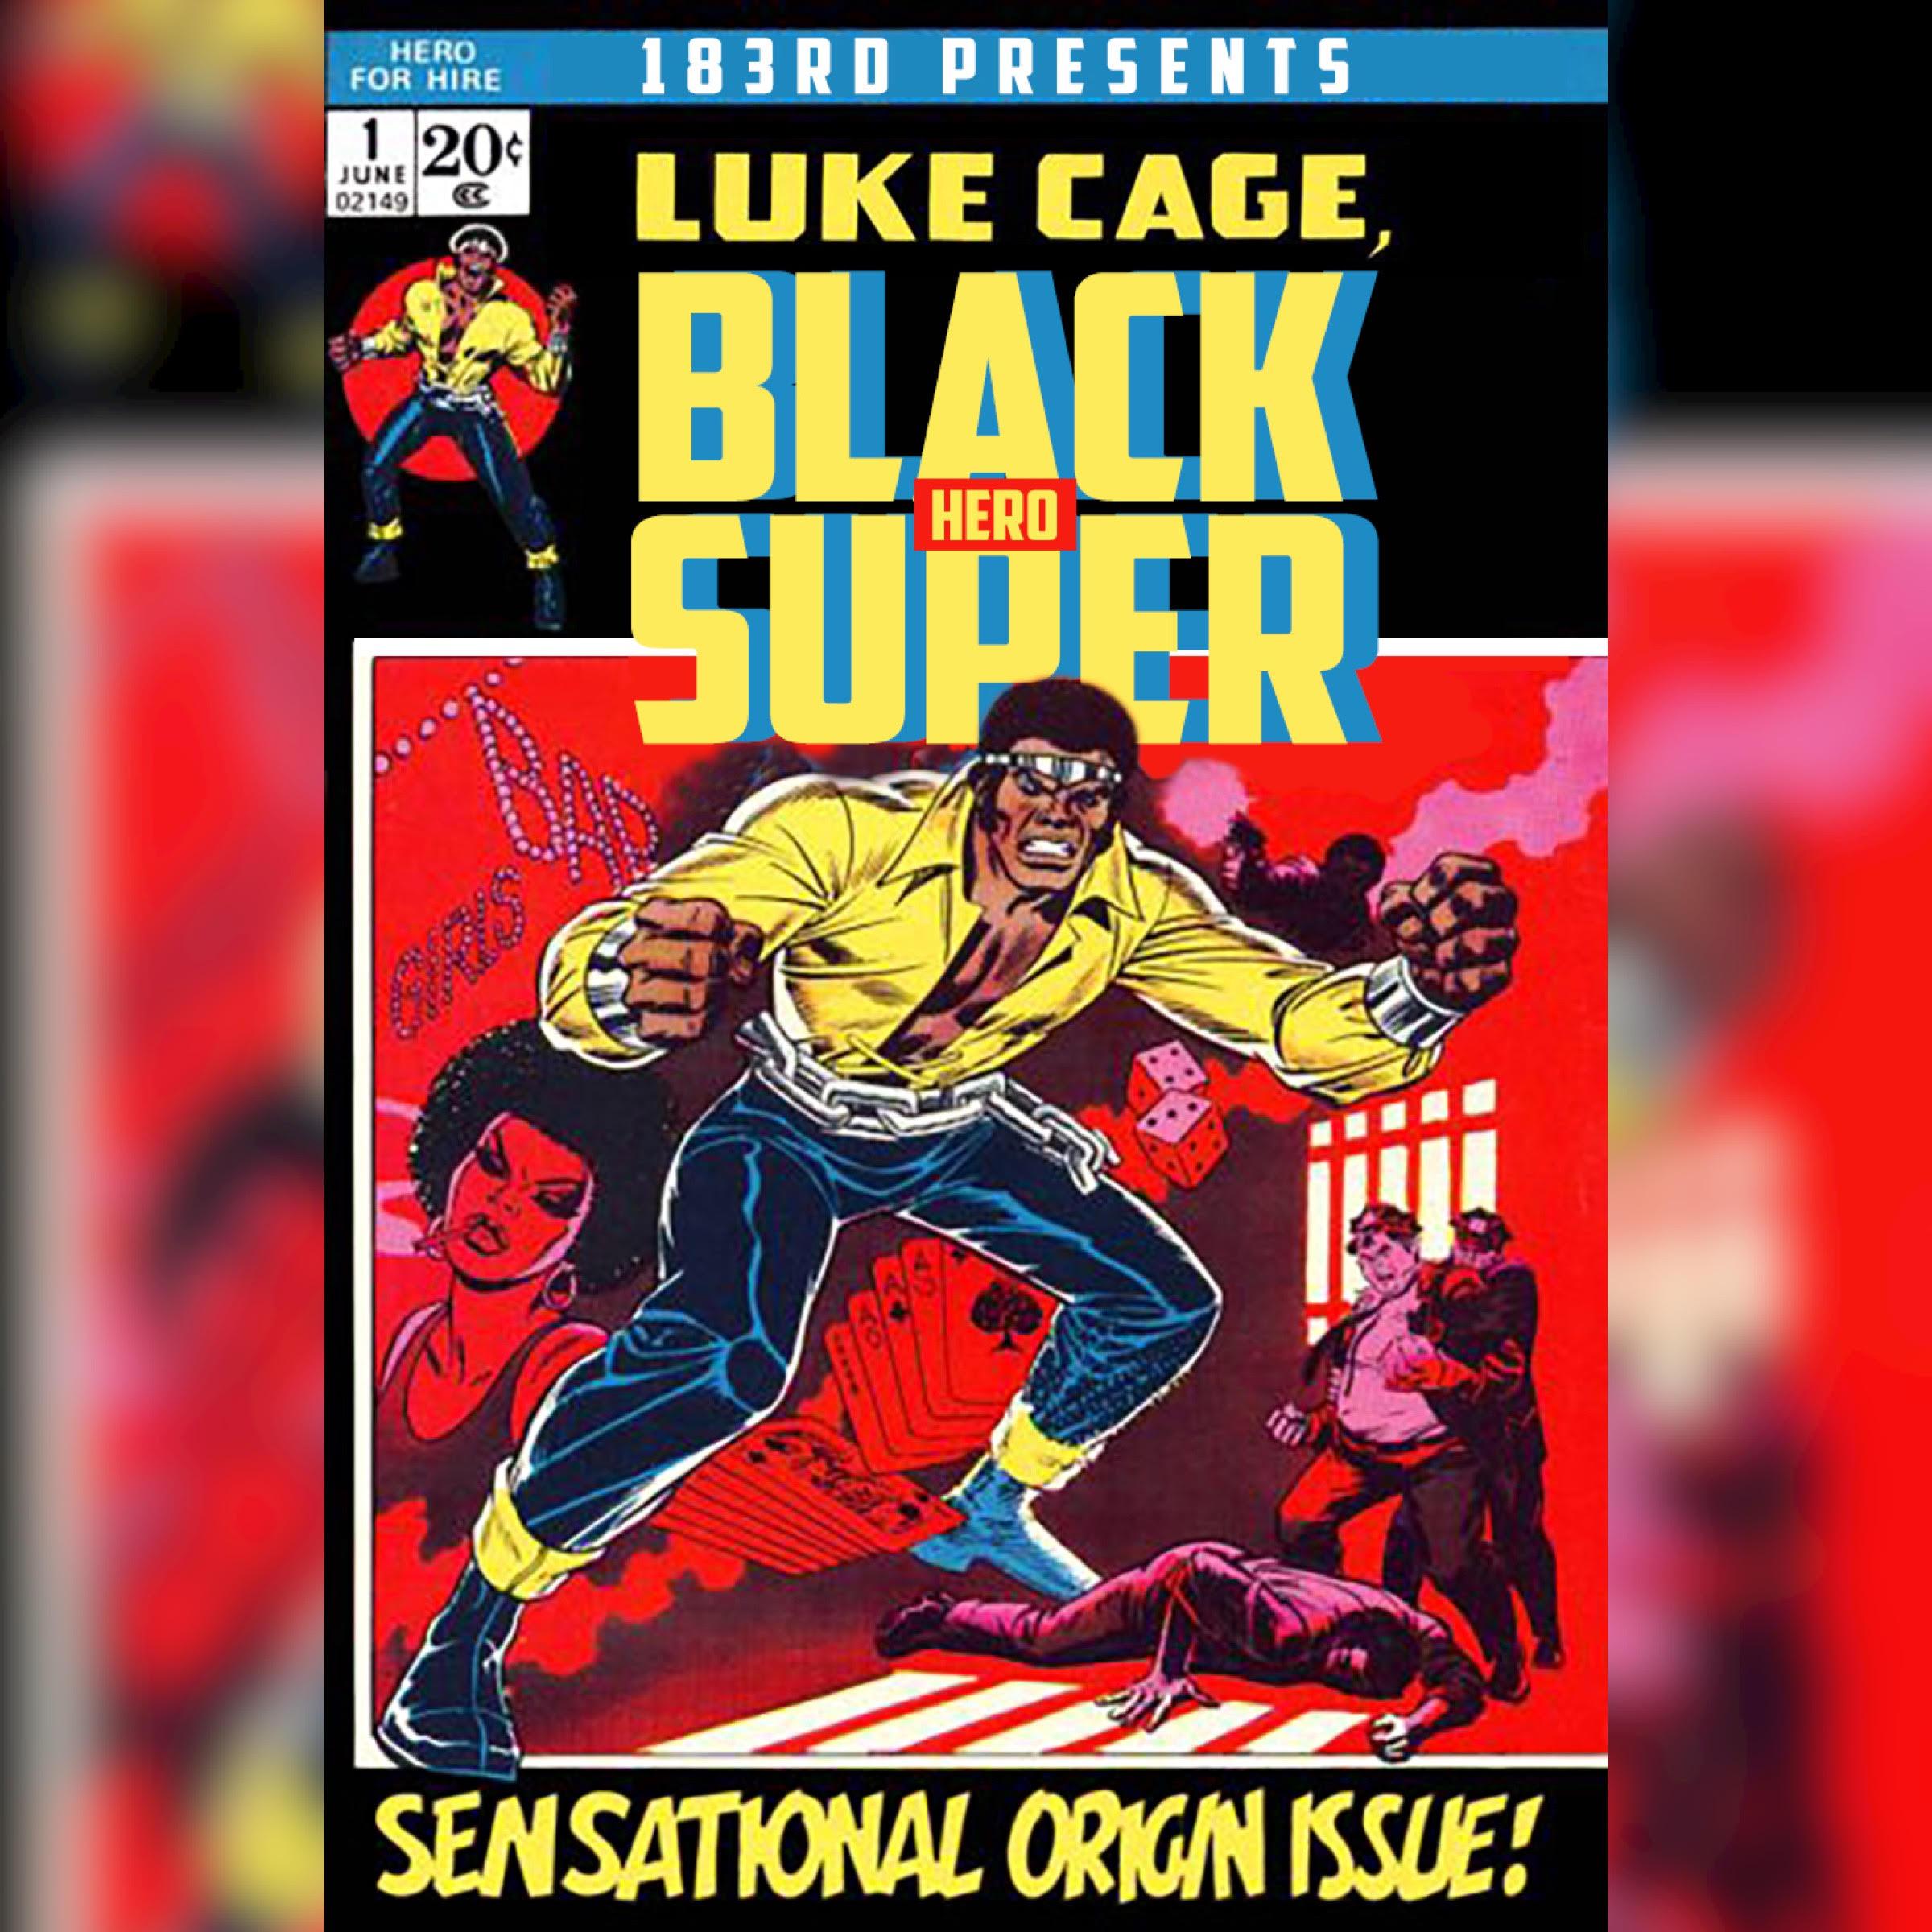 BLACK SUPER HERO ( LUKE CAGE )